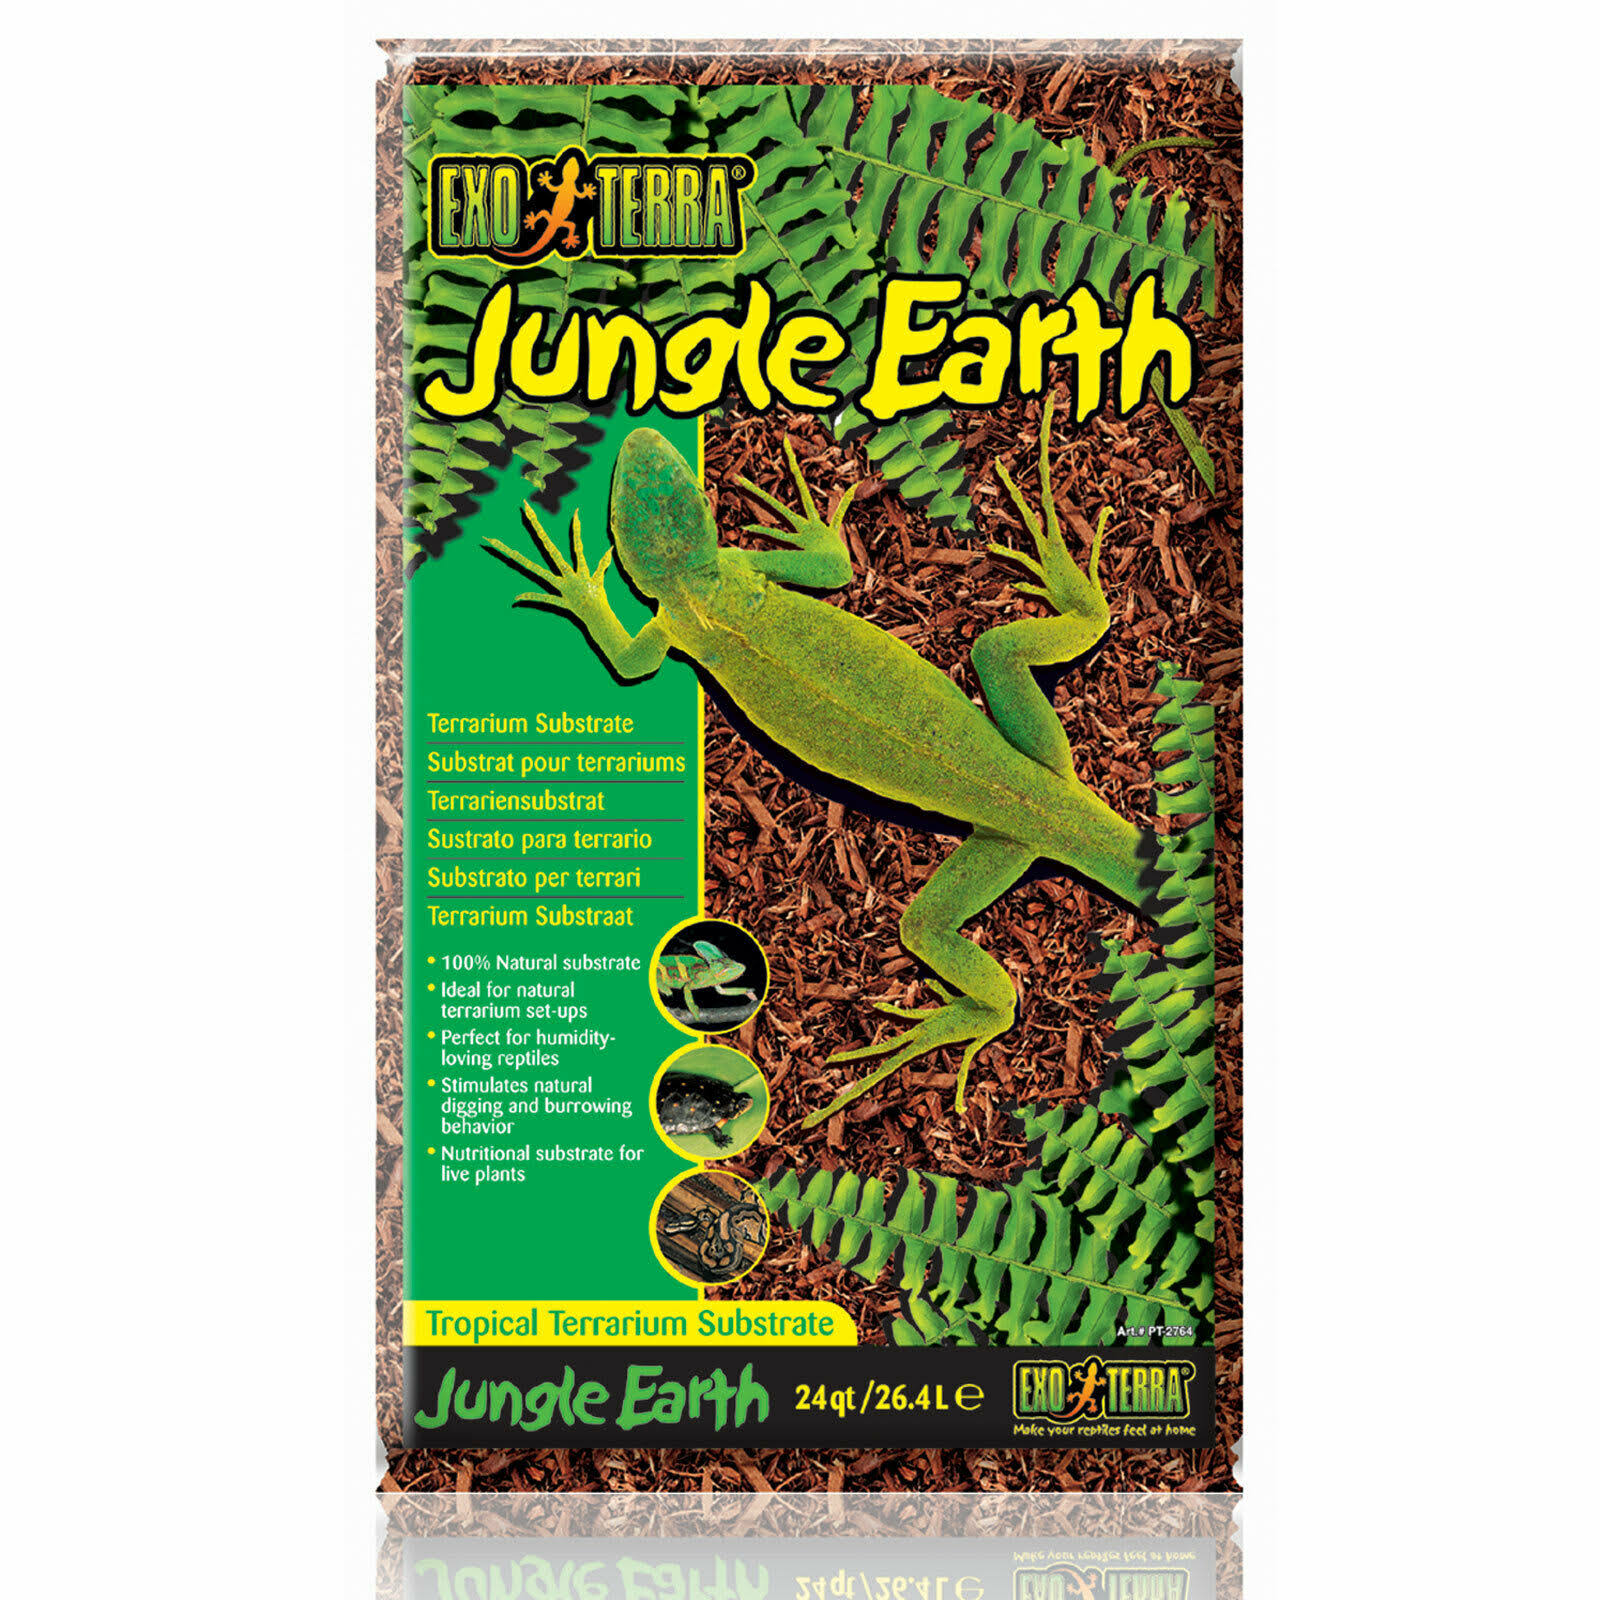 EXO Terra Reptile Terrarium Jungle Earth Substrate - 24qt